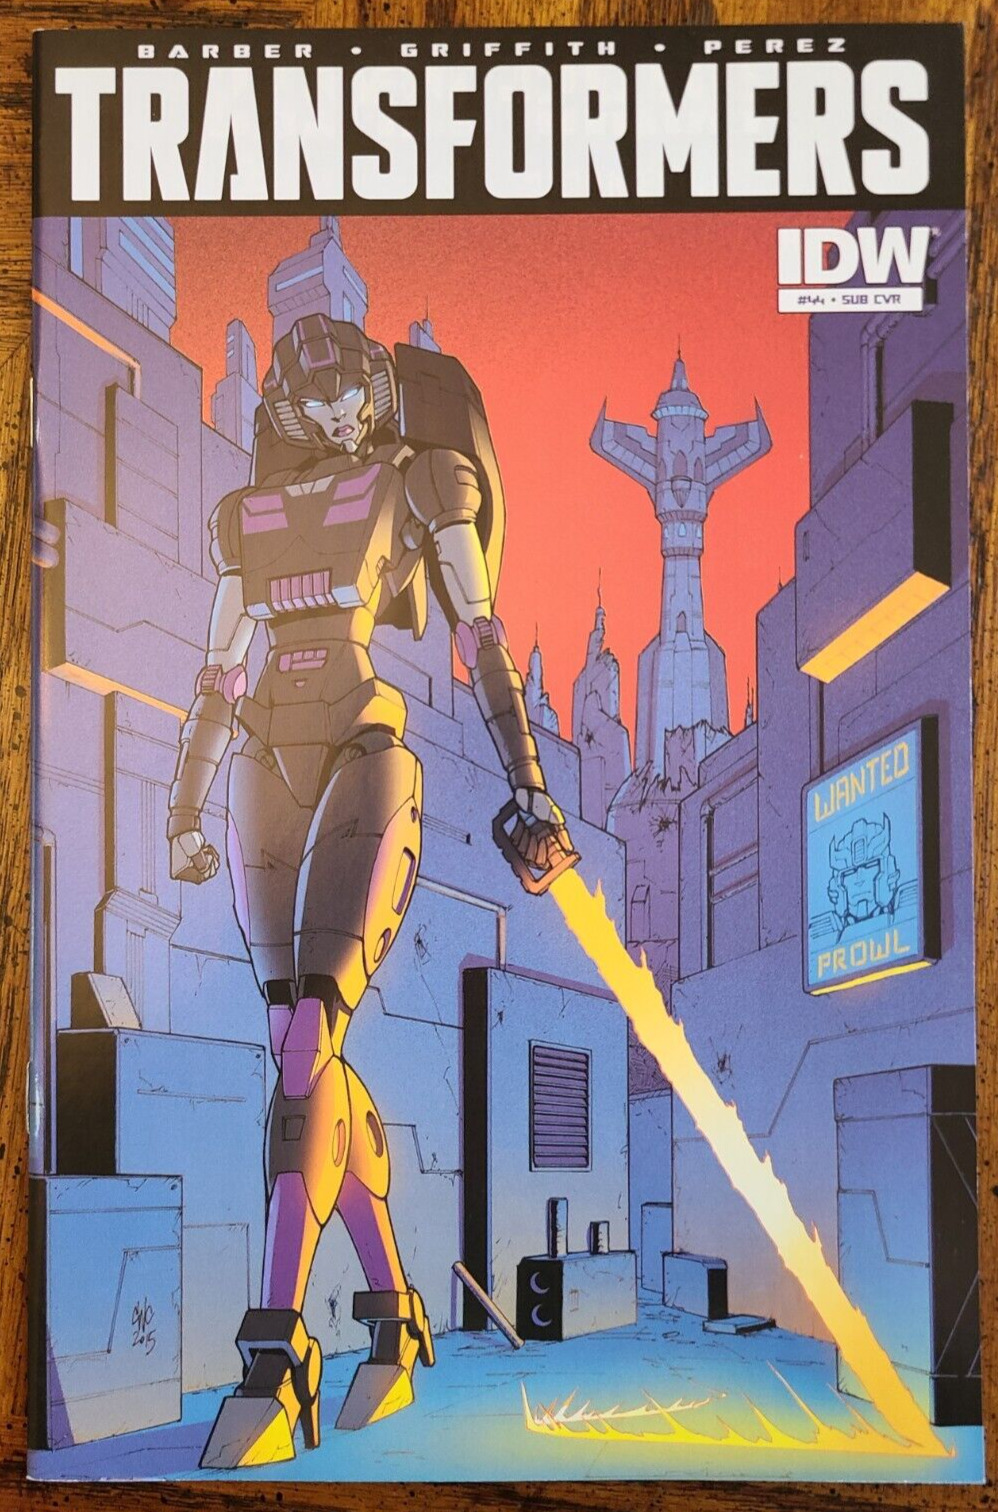 Transformers IDW #44 Sub Cover Arcee, NM